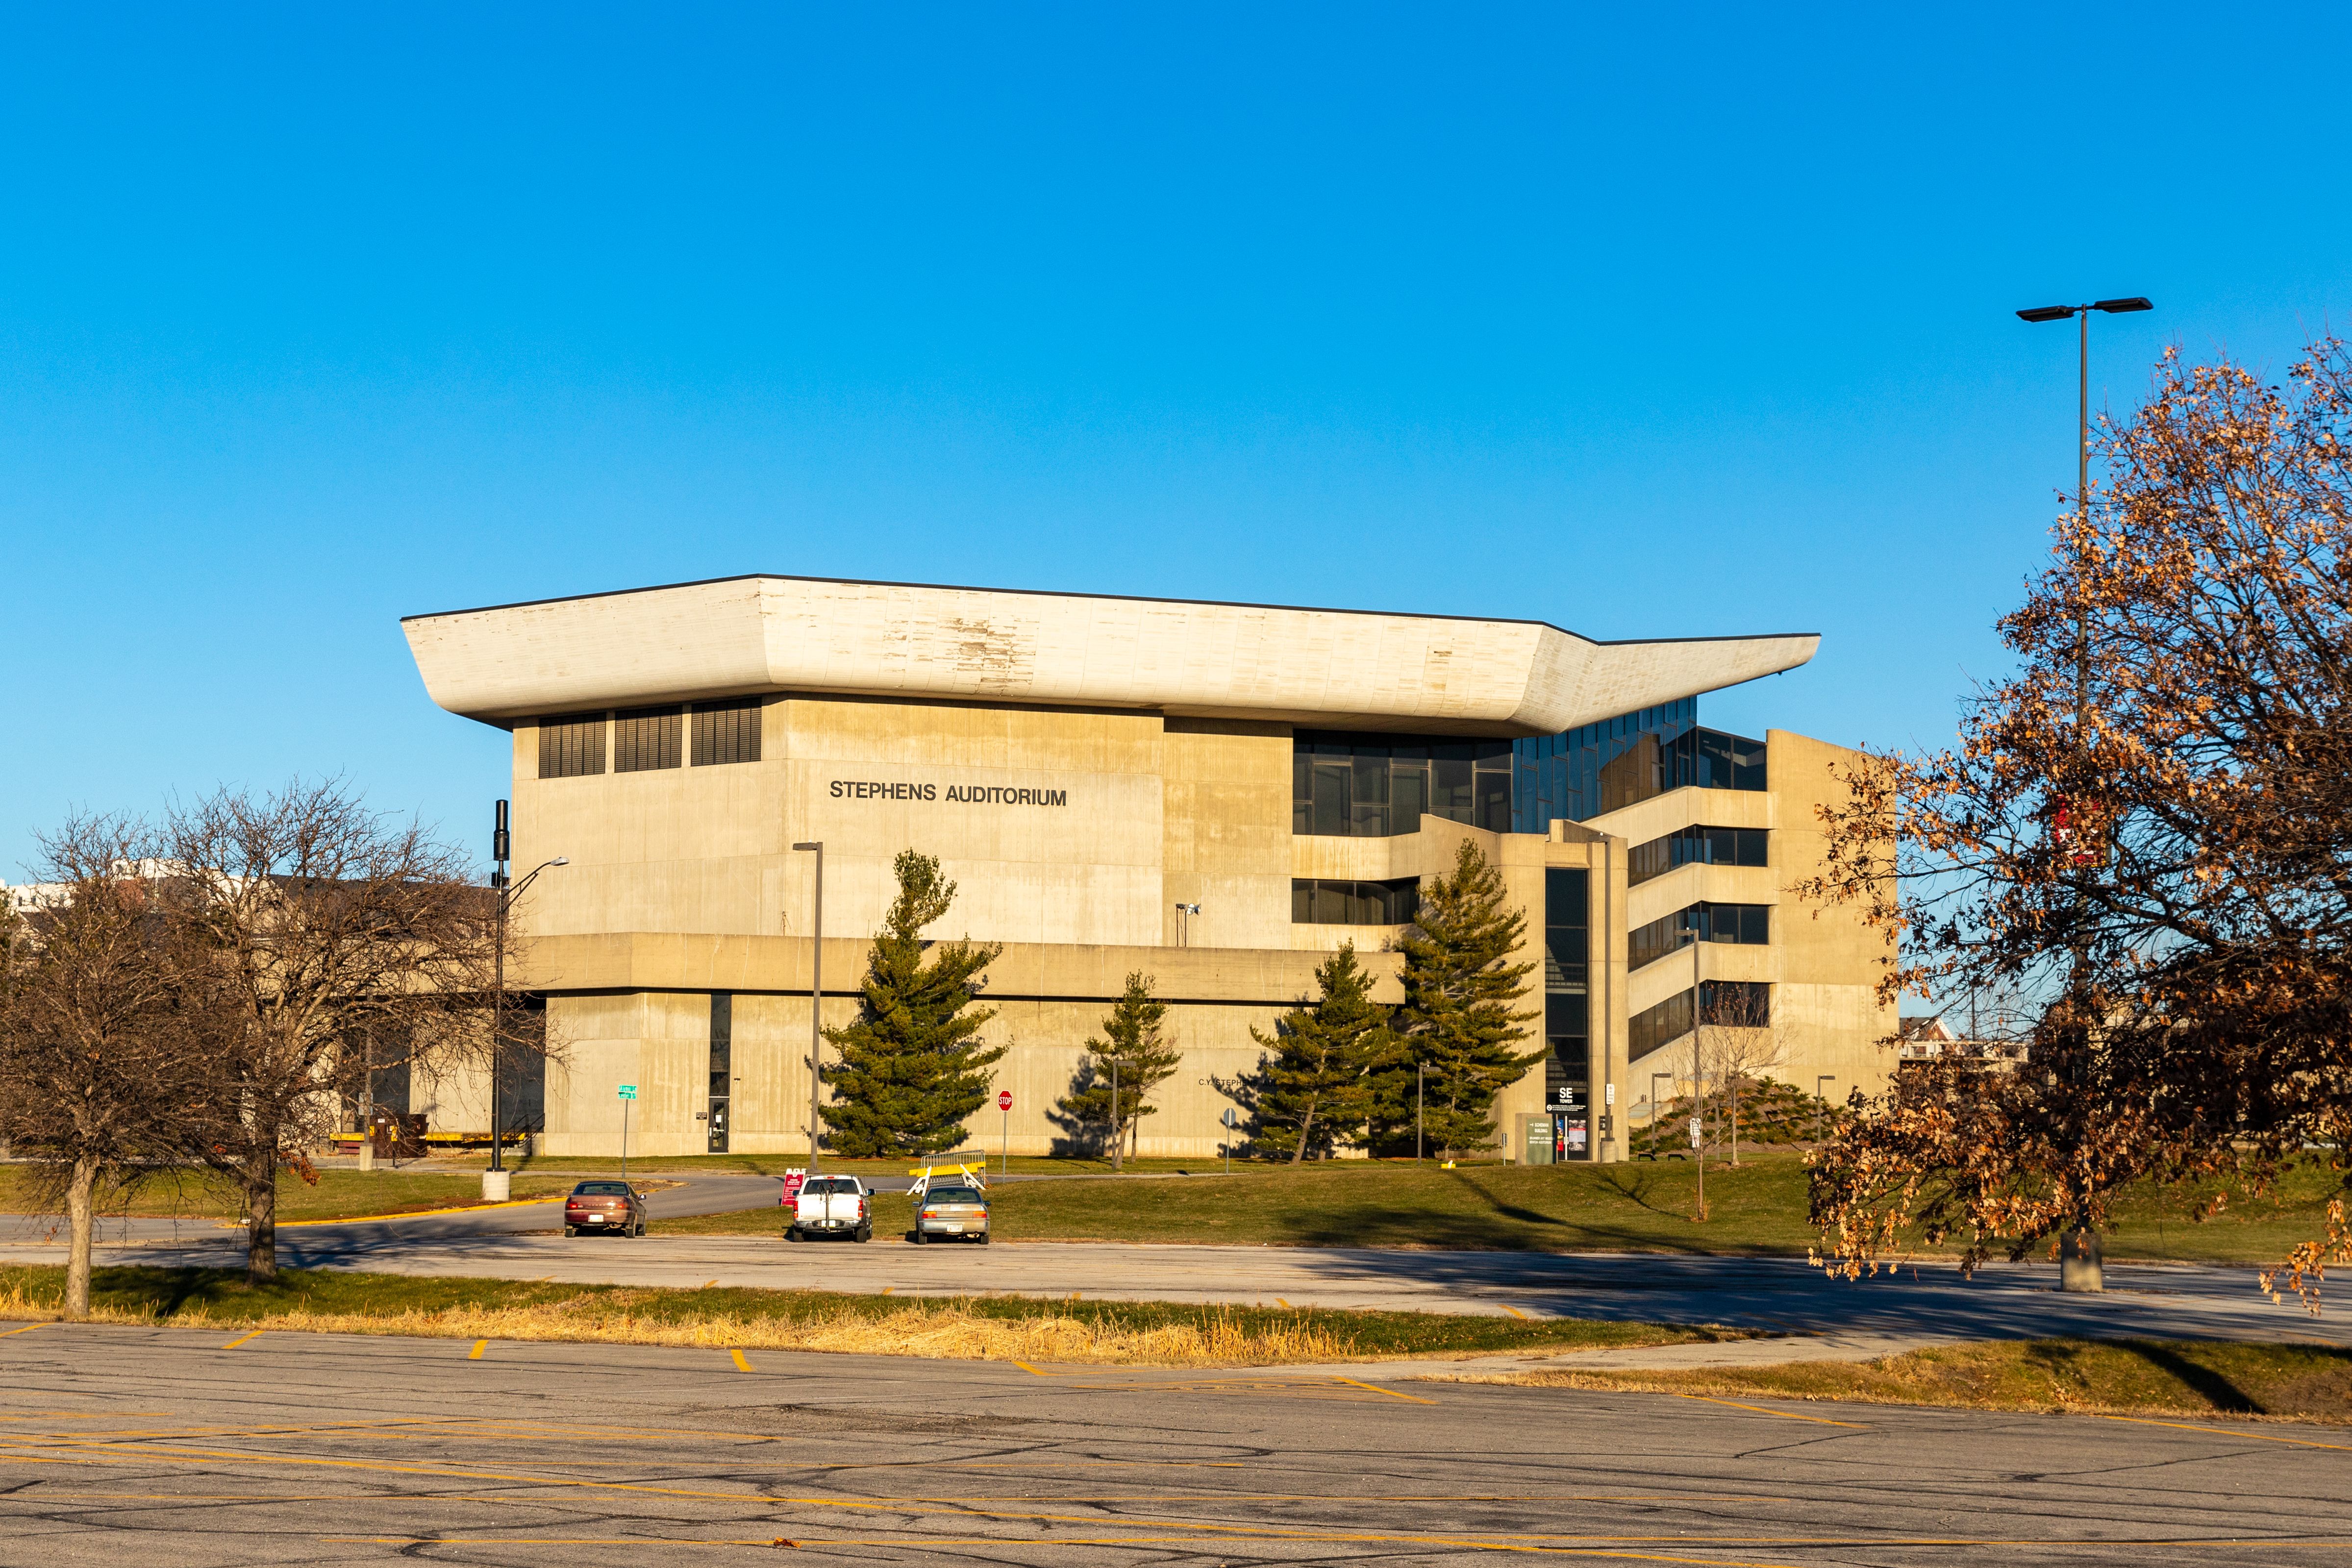  Stephens Auditorium in Iowa State University